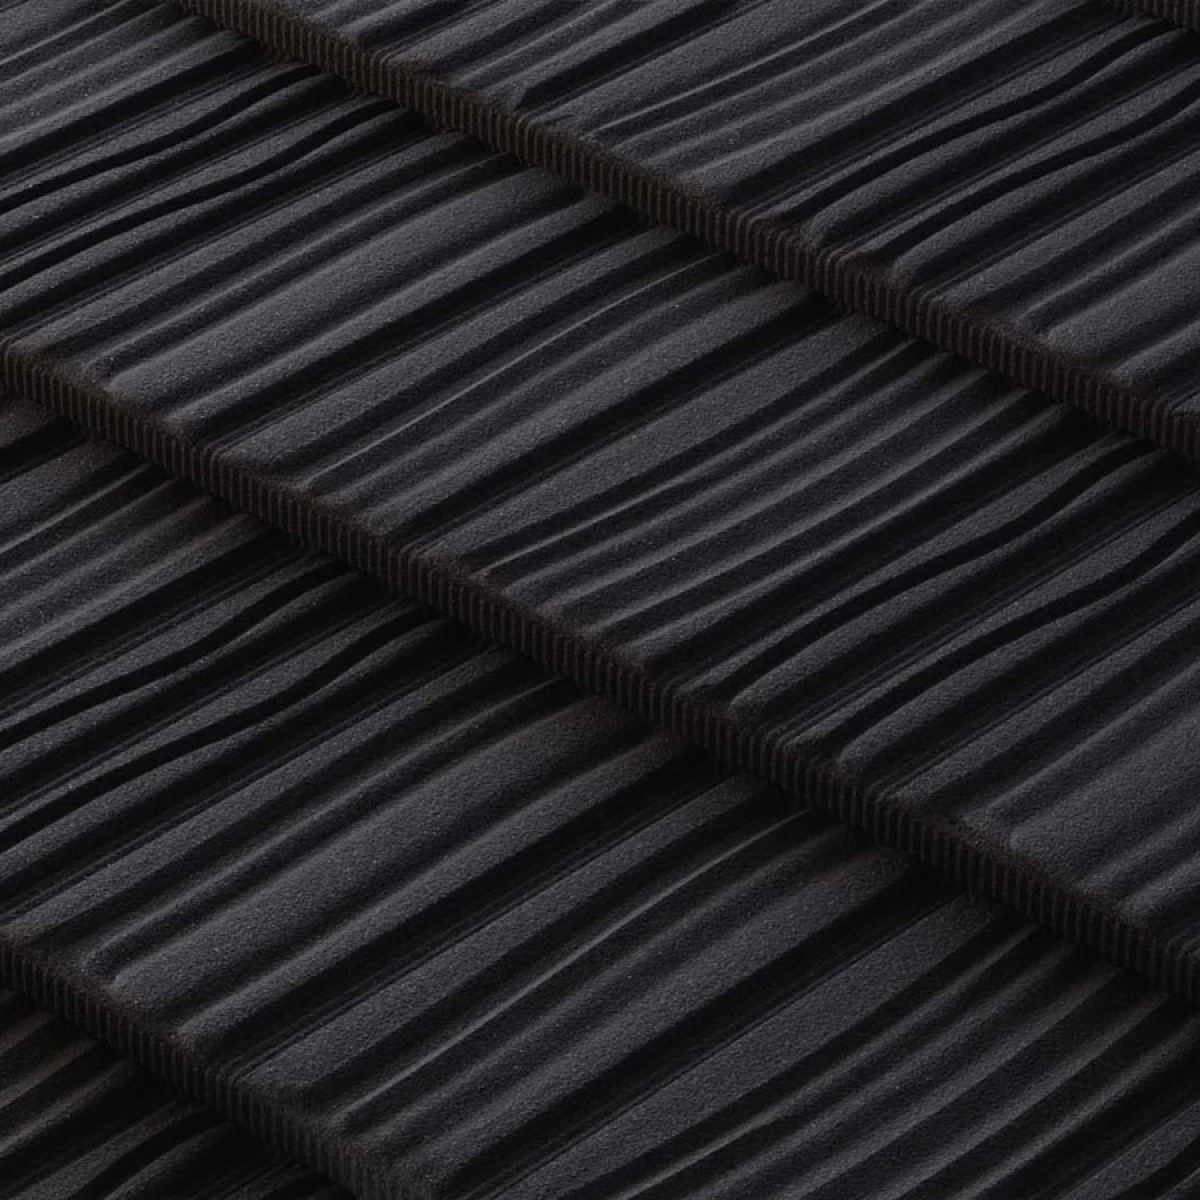 Metrotile Woodshake Metāla dakstiņi ar akmens smalci, 1340x415mm, coal black